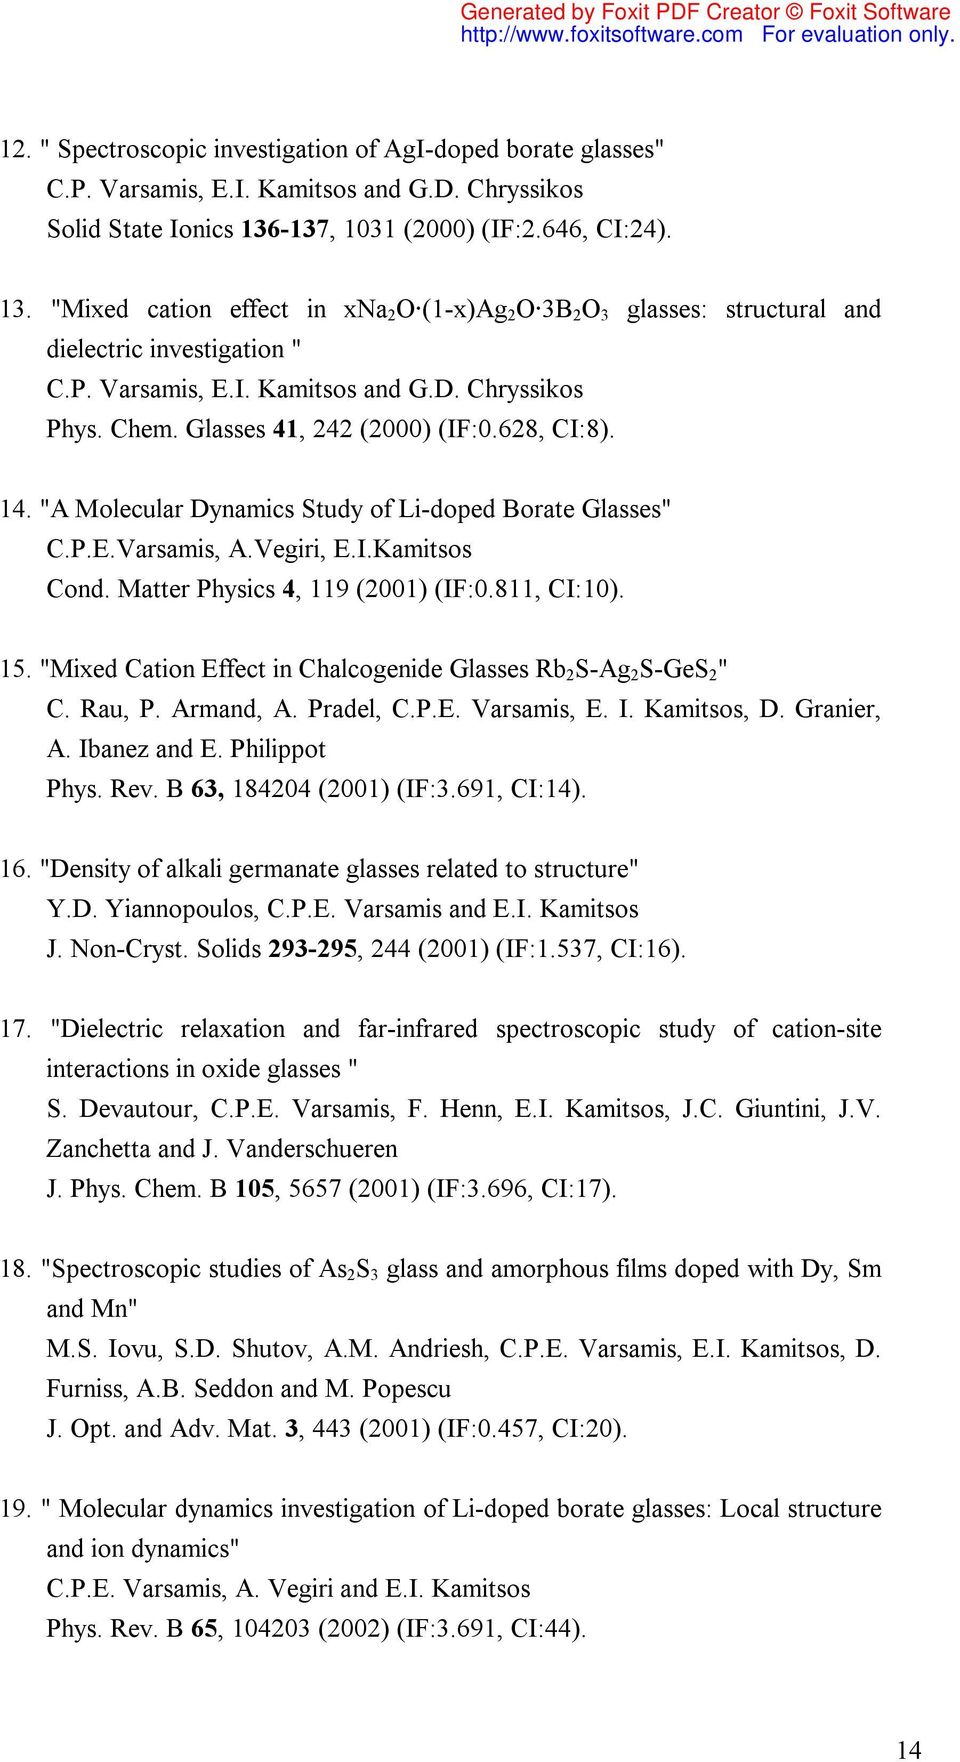 Chem. Glasses 41, 242 (2000) (IF:0.628, CI:8). 14. "A Molecular Dynamics Study of Li-doped Borate Glasses" C.P.E.Varsamis, A.Vegiri, E.I.Kamitsos Cond. Matter Physics 4, 119 (2001) (IF:0.811, CI:10).